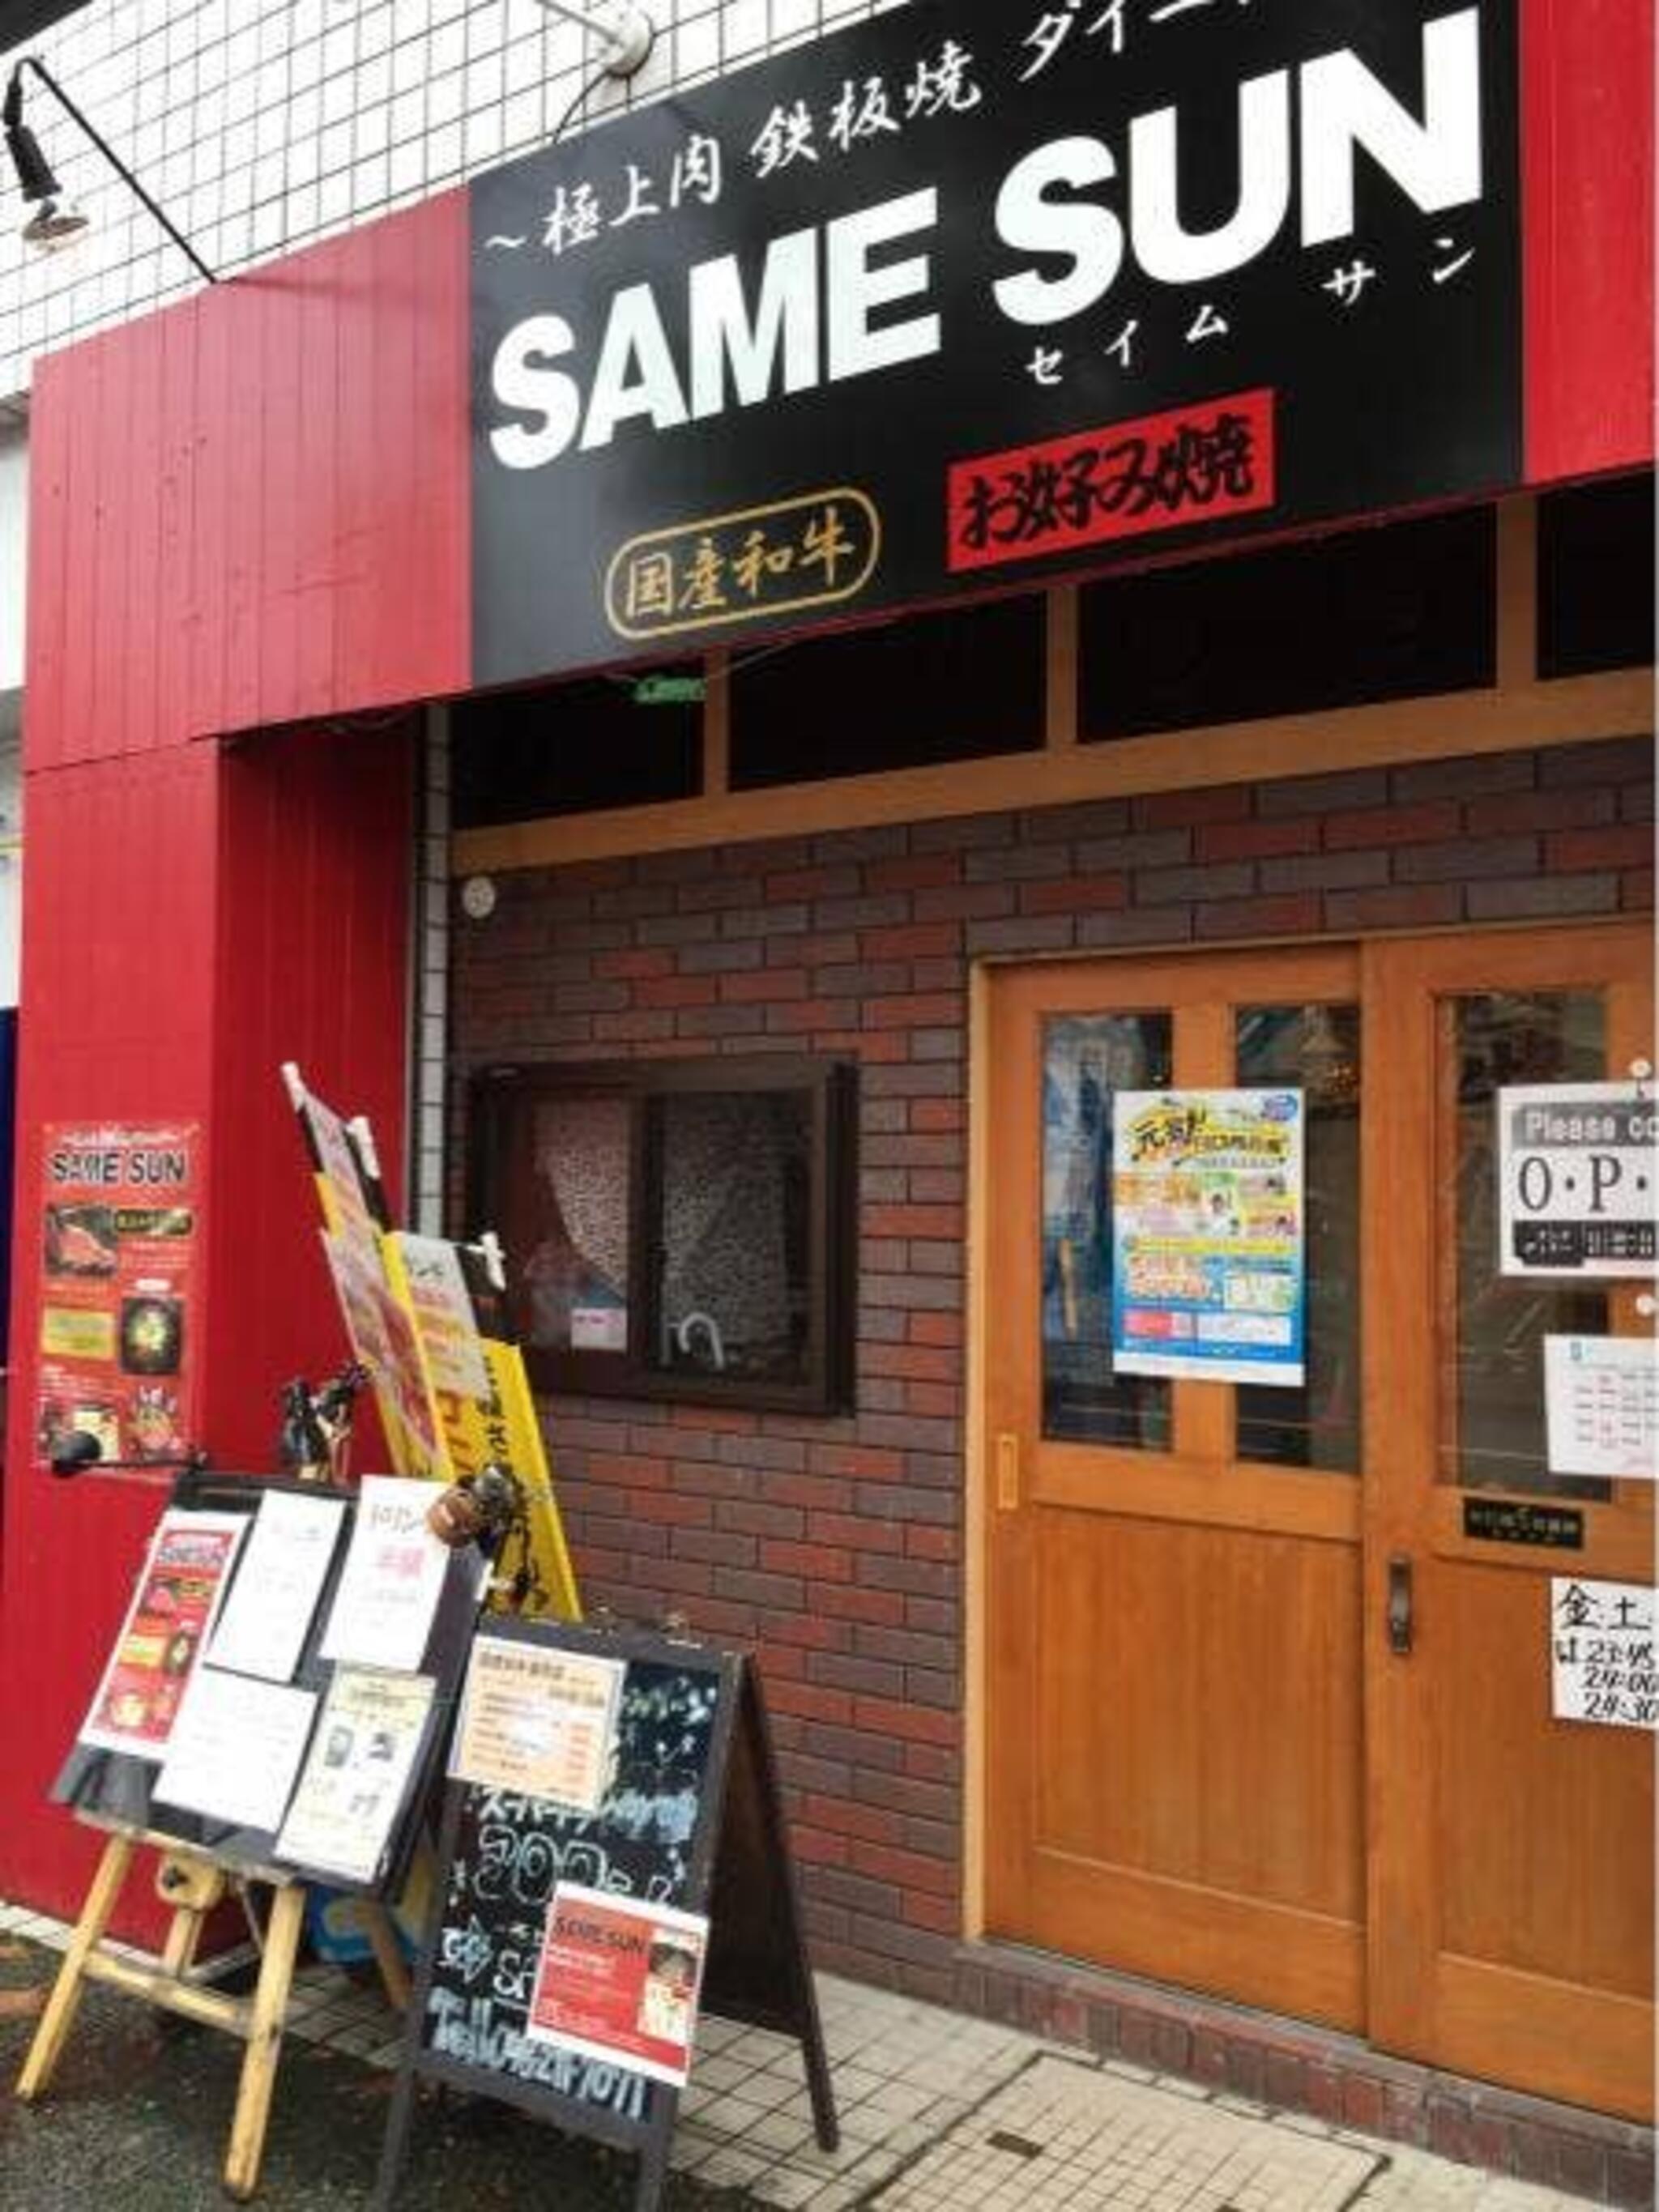 肉肉 鉄板焼 居酒屋 SAME SUN japanese WAGYU restaurantの代表写真2